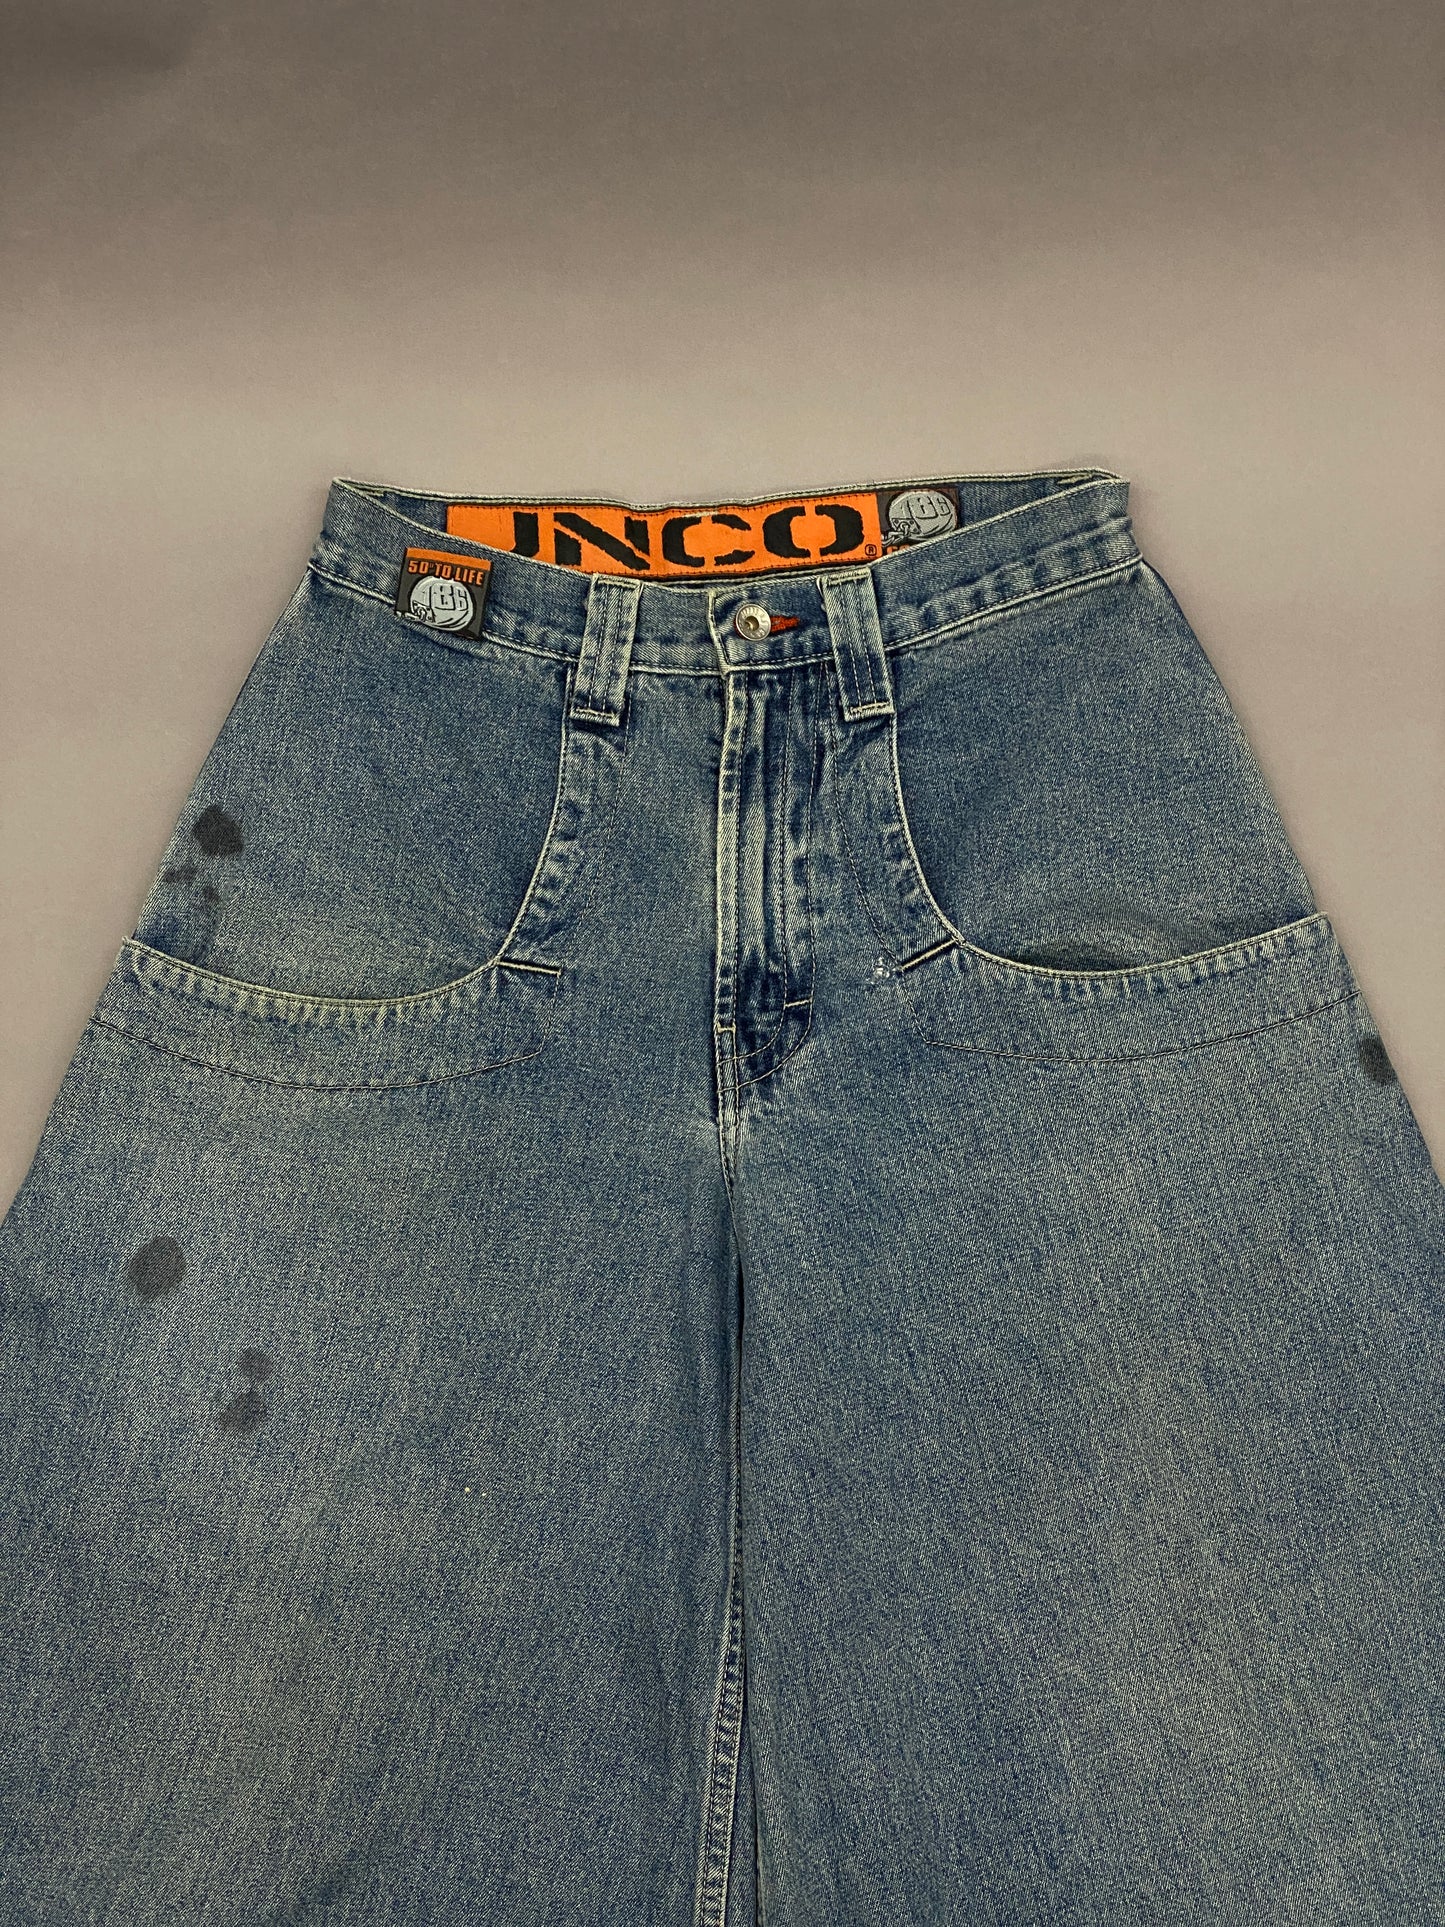 JNCO Convict 50 Vintage Jeans - 28